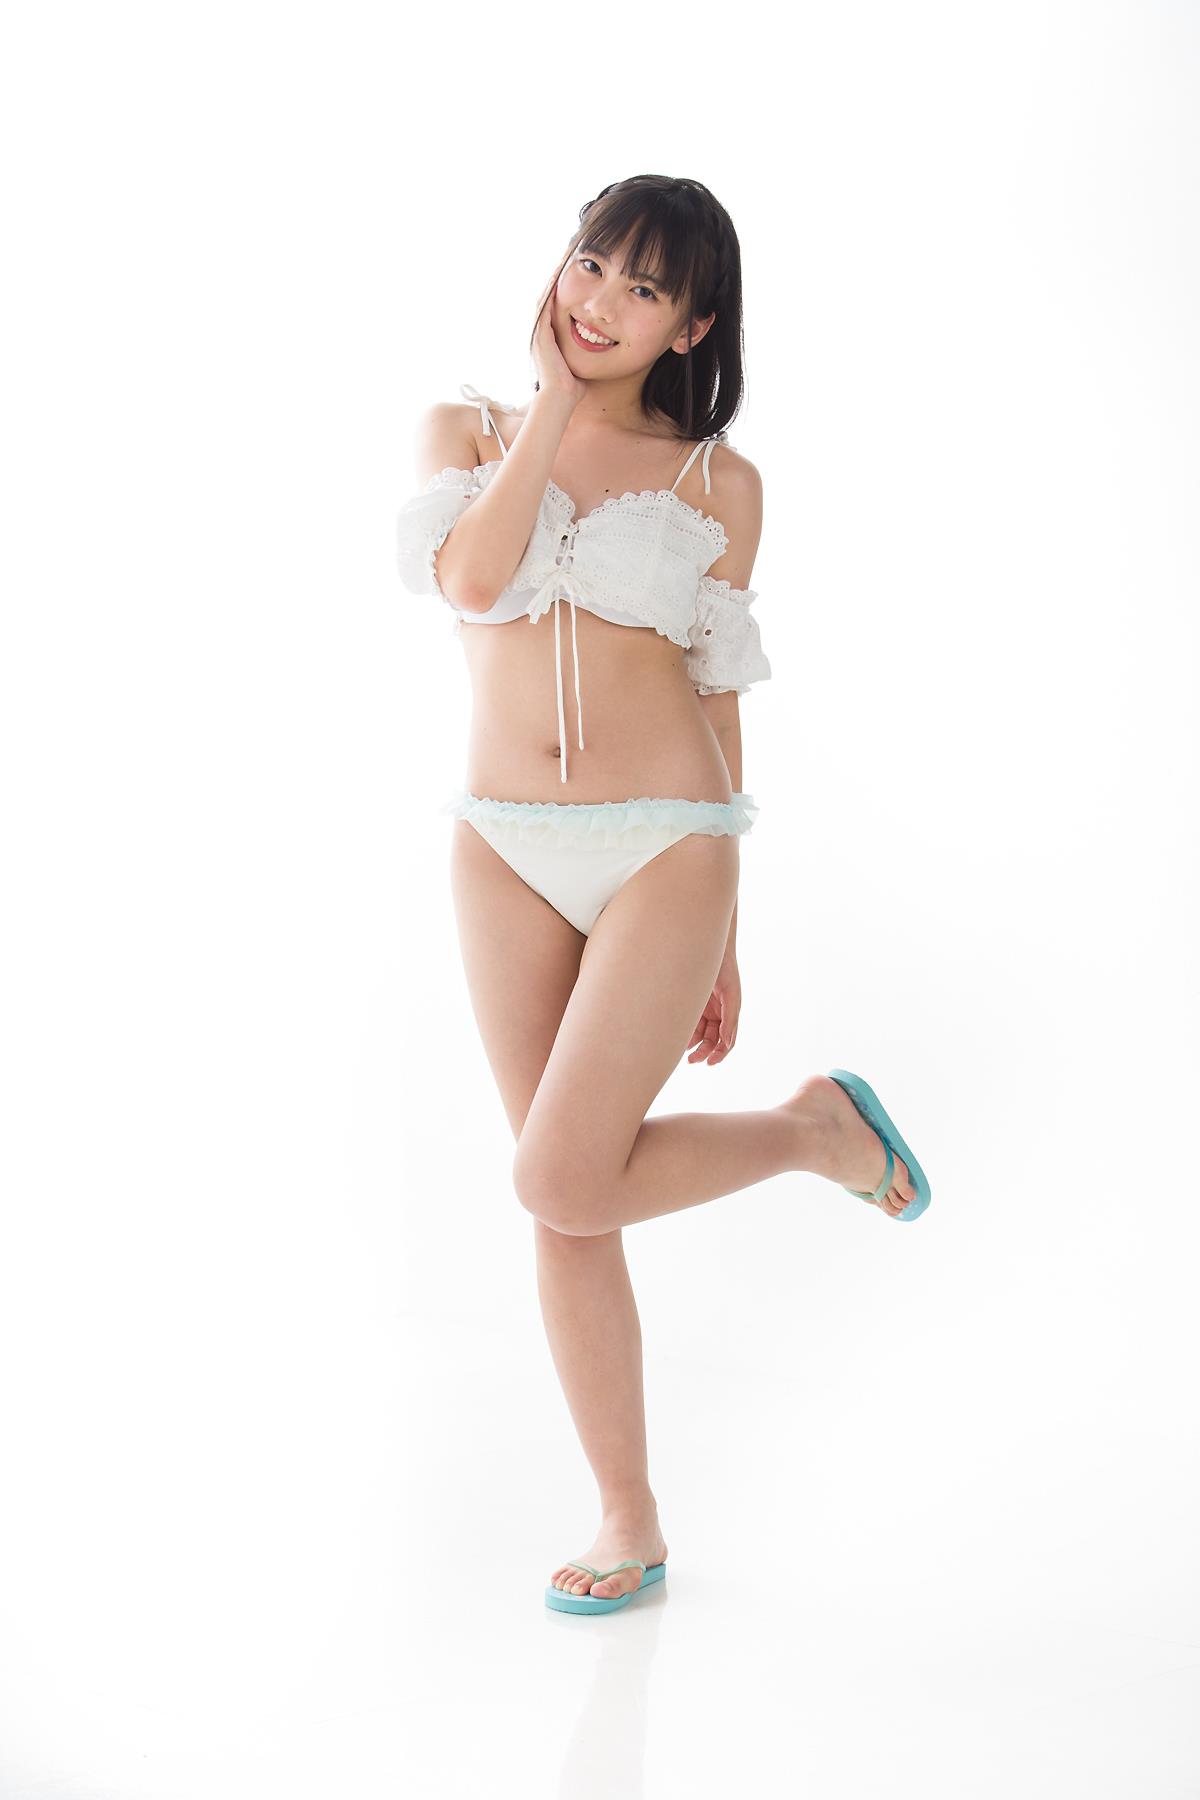 Minisuka.tv Sarina Kashiwagi 柏木さりな Premium Gallery 2.6 - 10.jpg